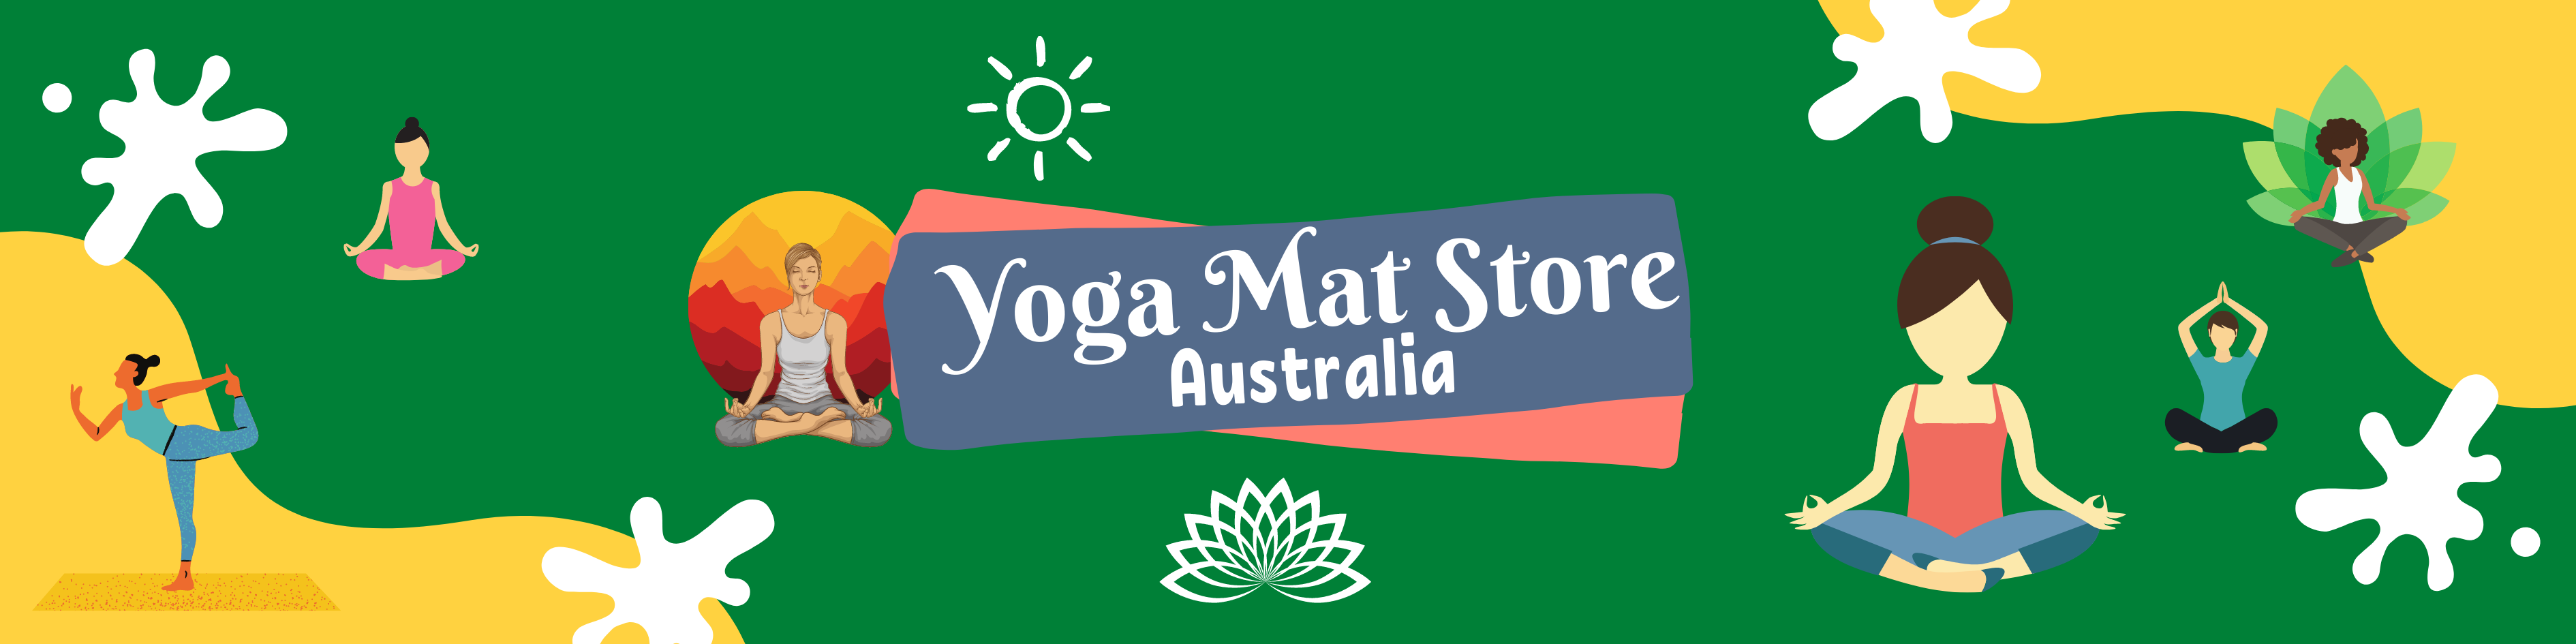 australias top yoga mat store